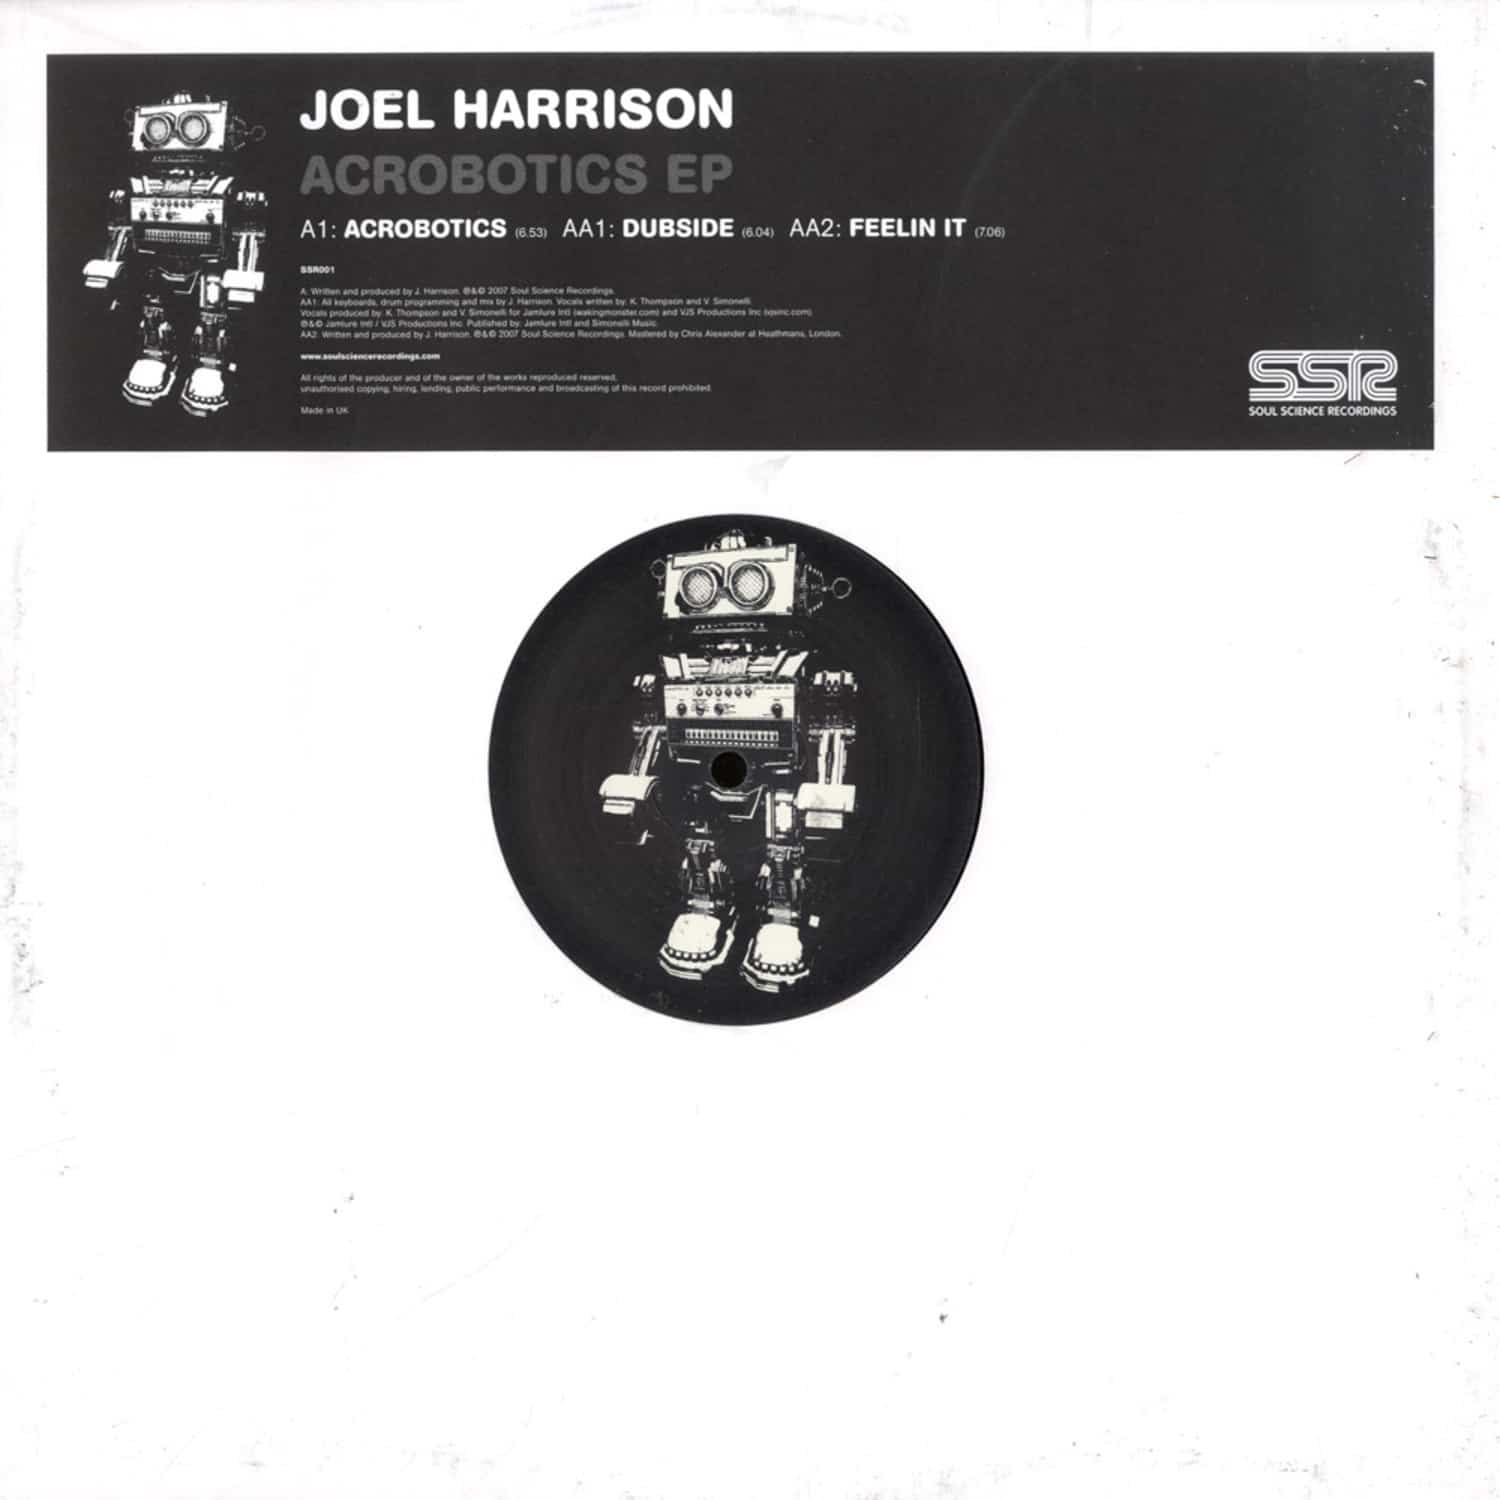 Joel Harrison - ACROBOTICS EP